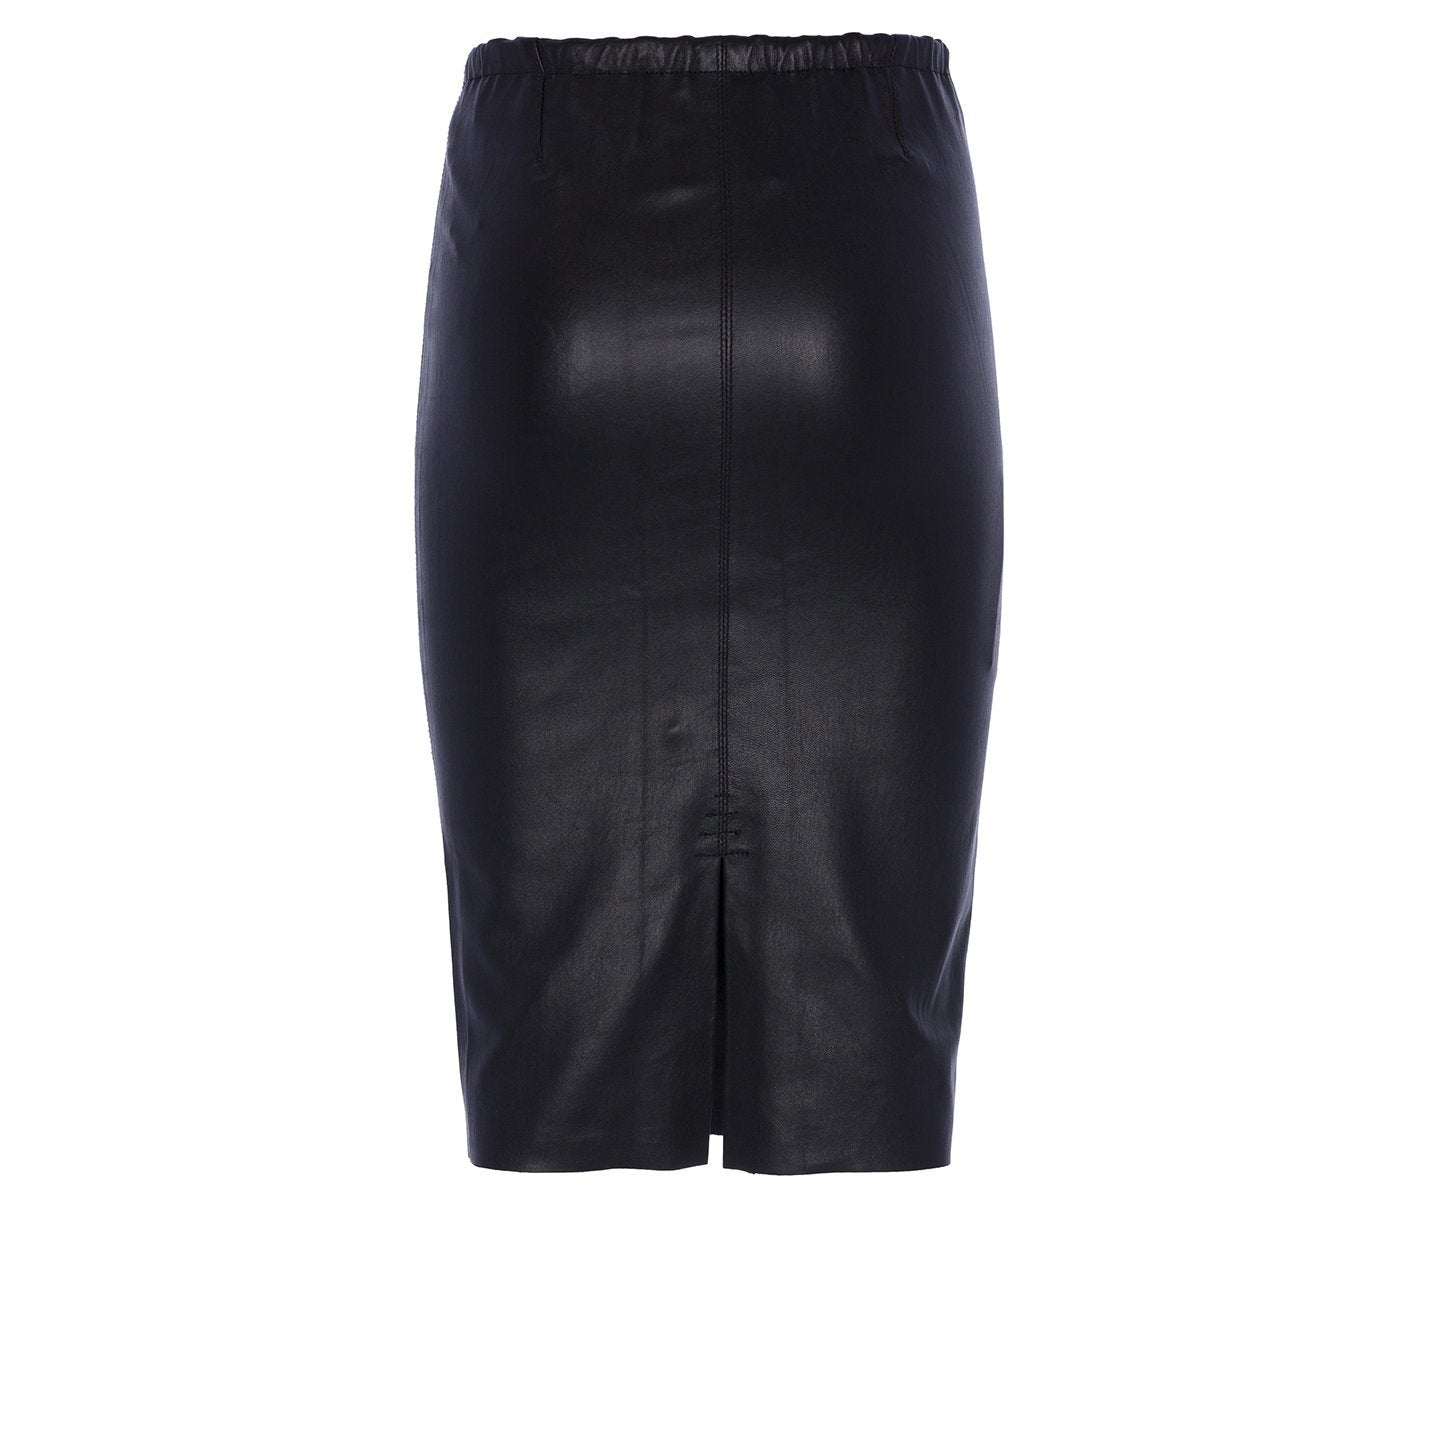 Designer high waisted leather skirt by MON&PAU